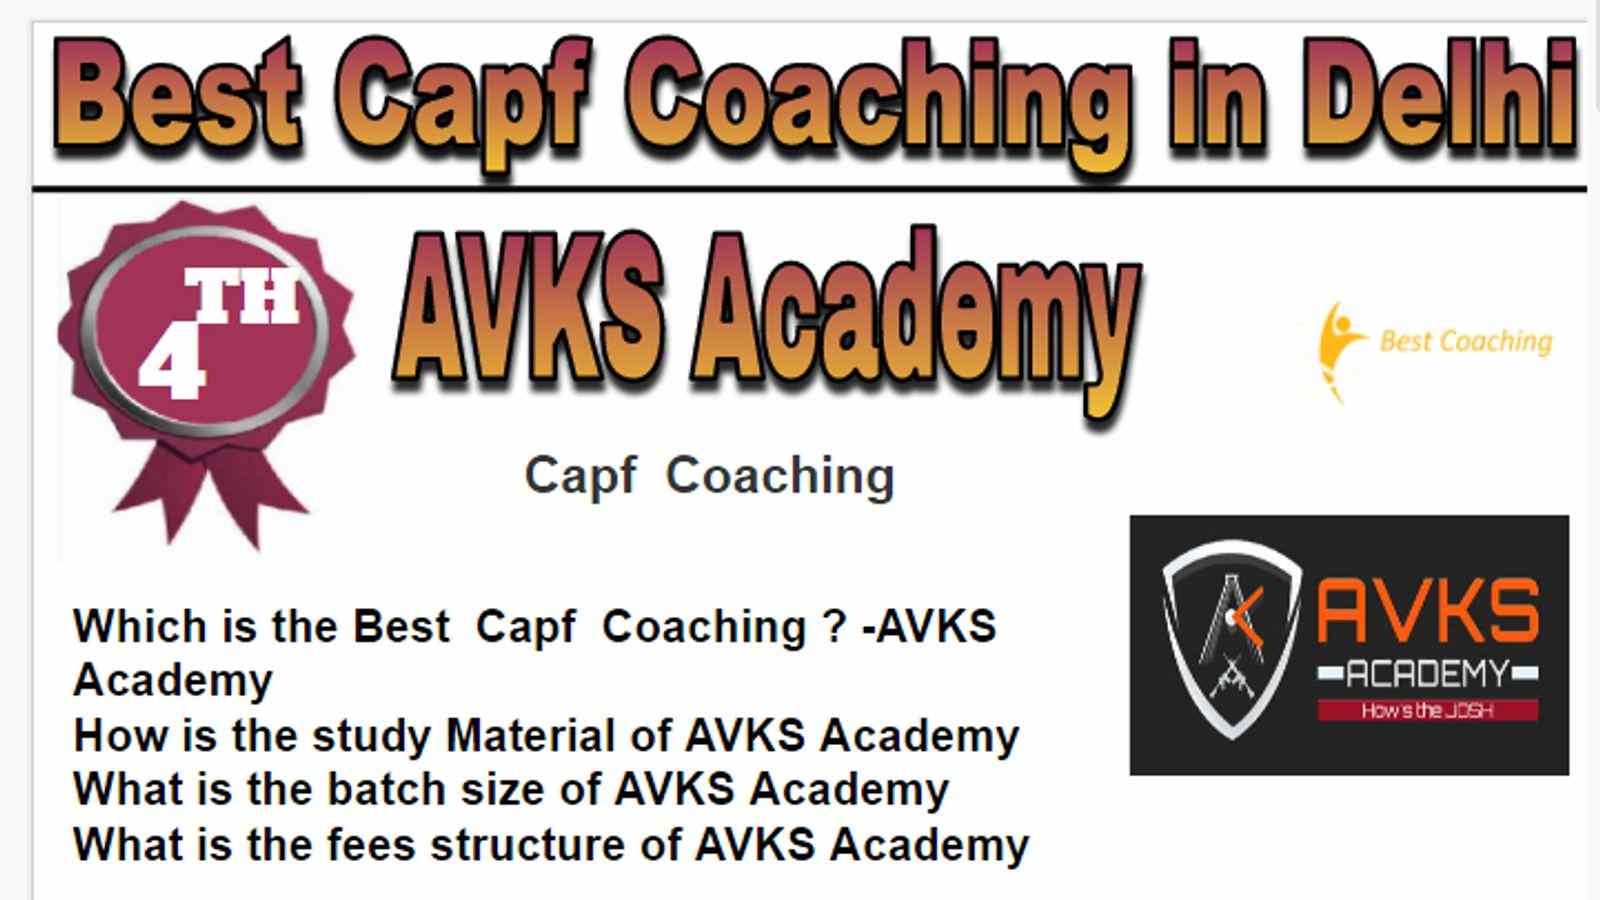 Rank-4 Best Capf Coaching in Delhi